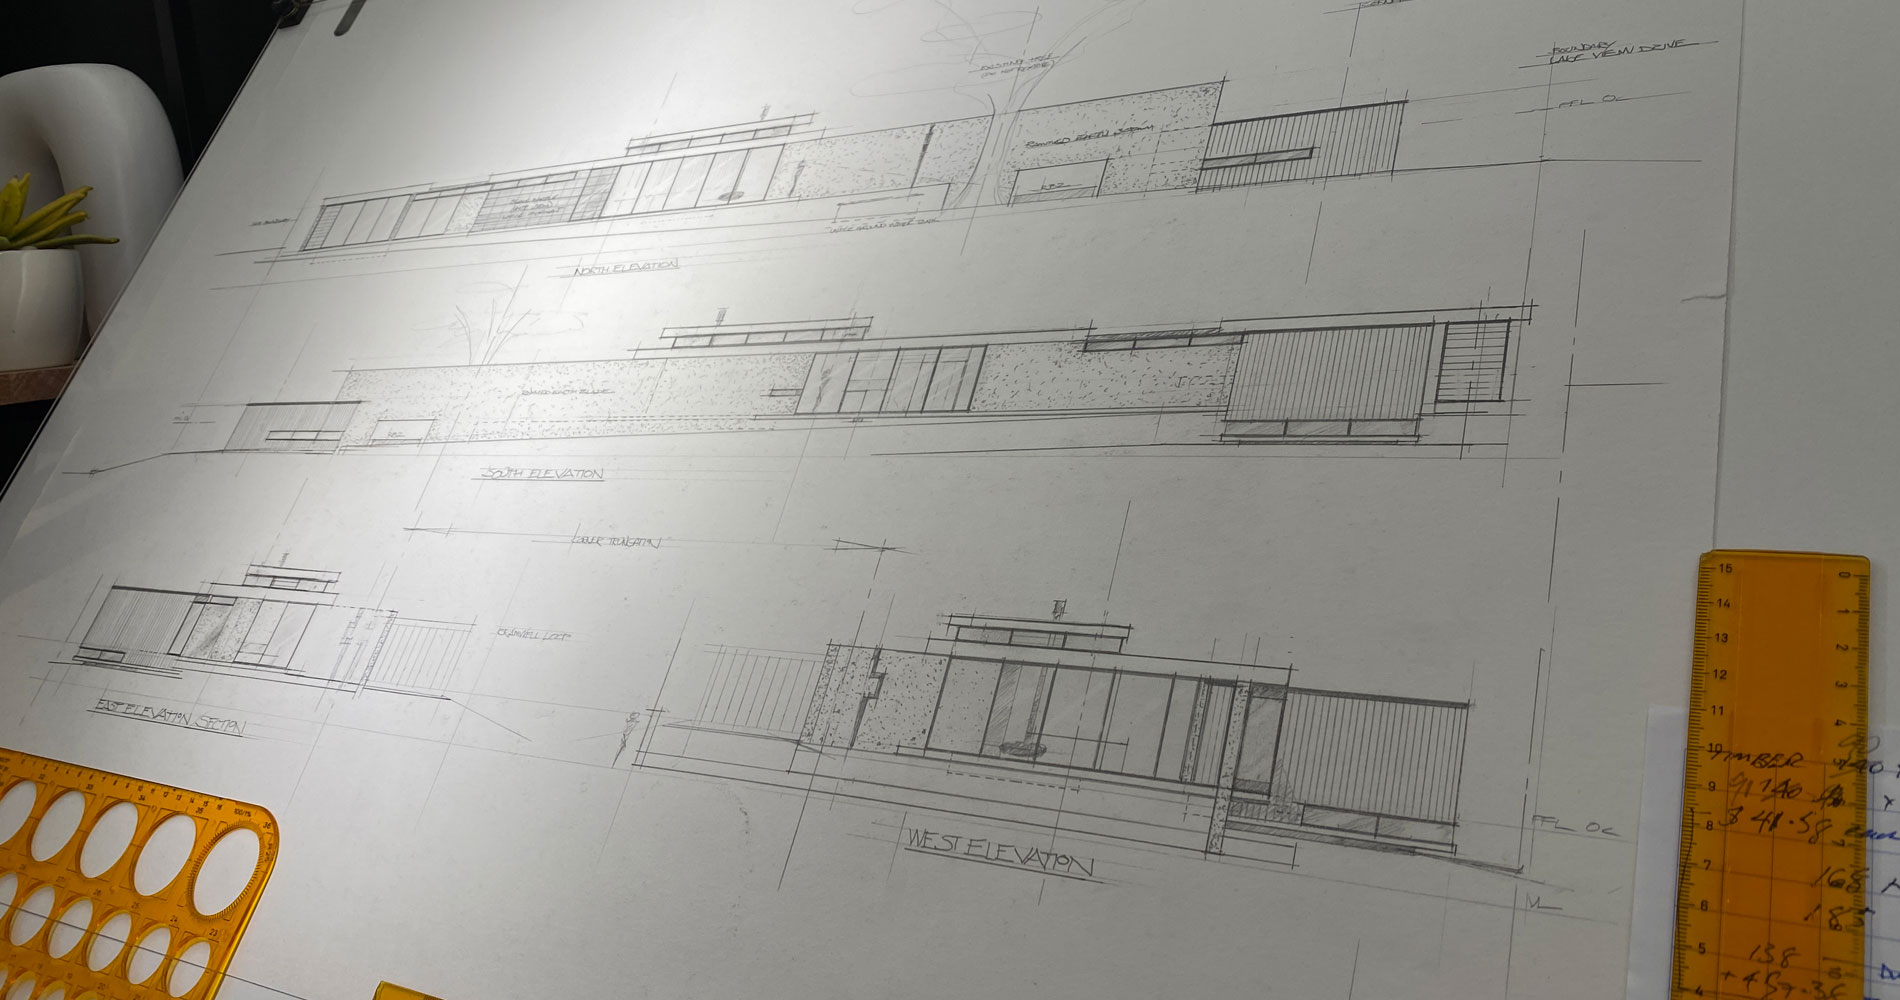 Original concept drawings of the Lakehaus